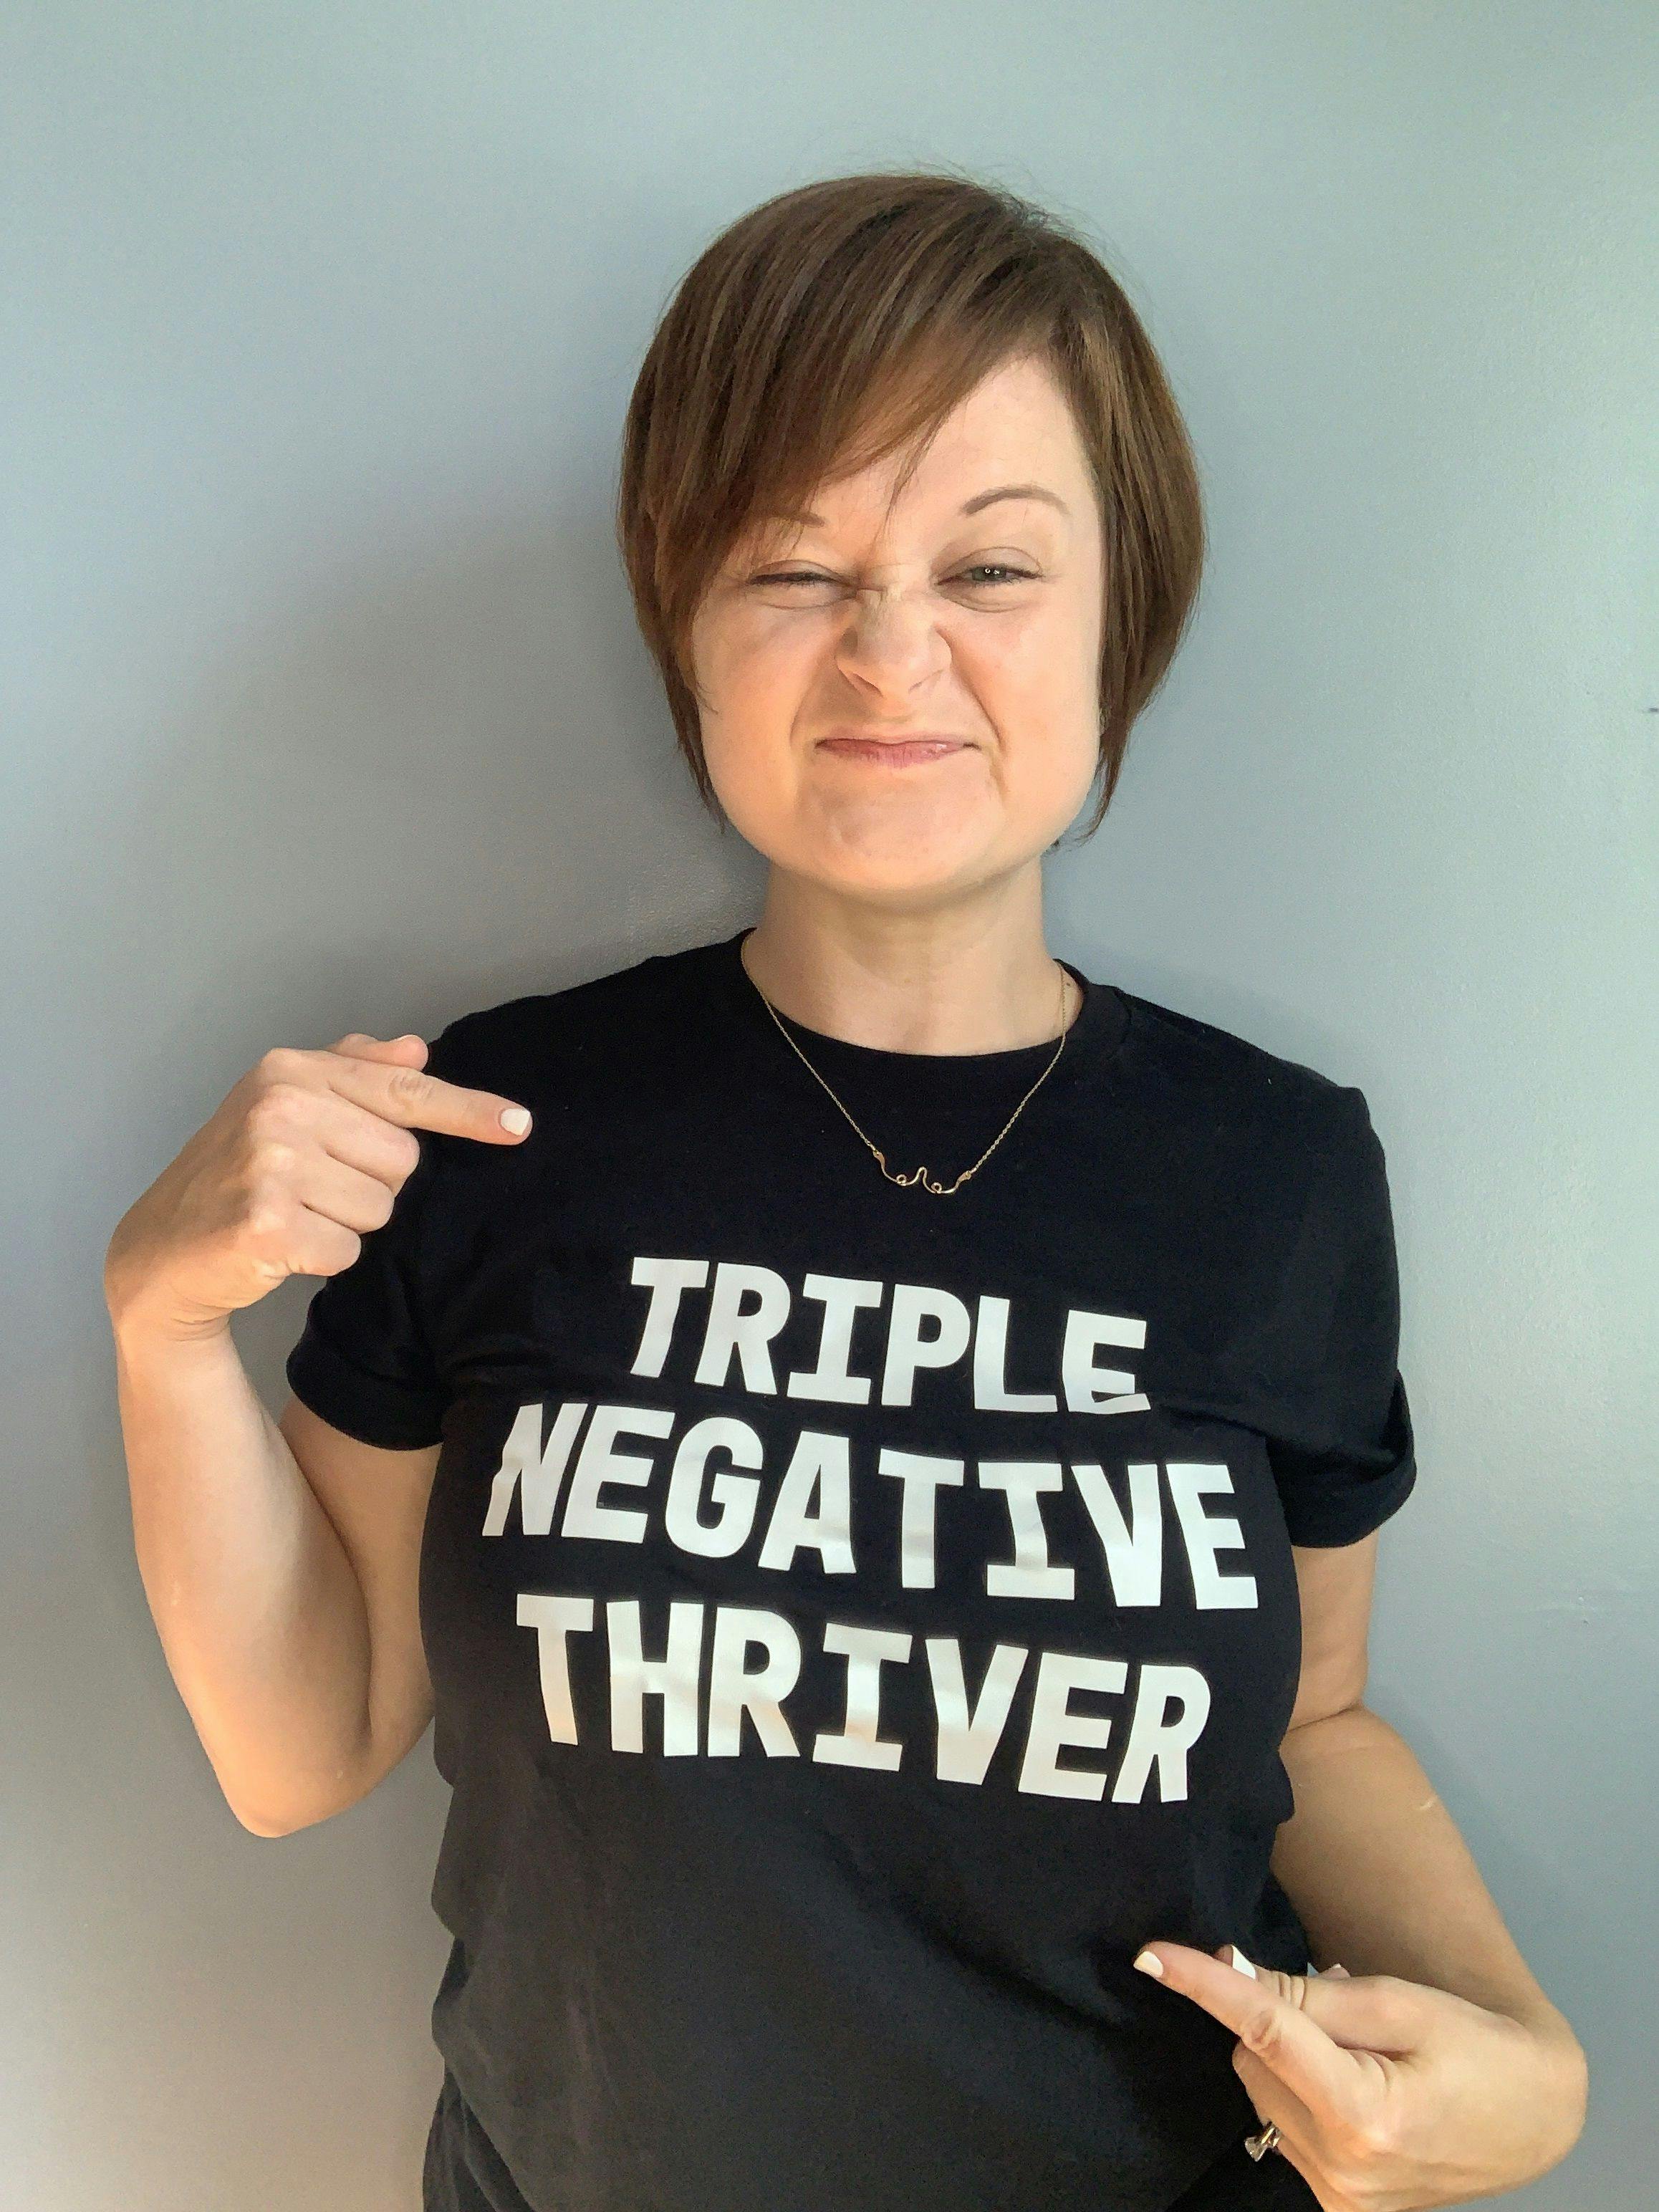 TNBC survivor Kelly Thomas wearing a black shirt that says, "TRIPLE NEGATIVE THRIVER"